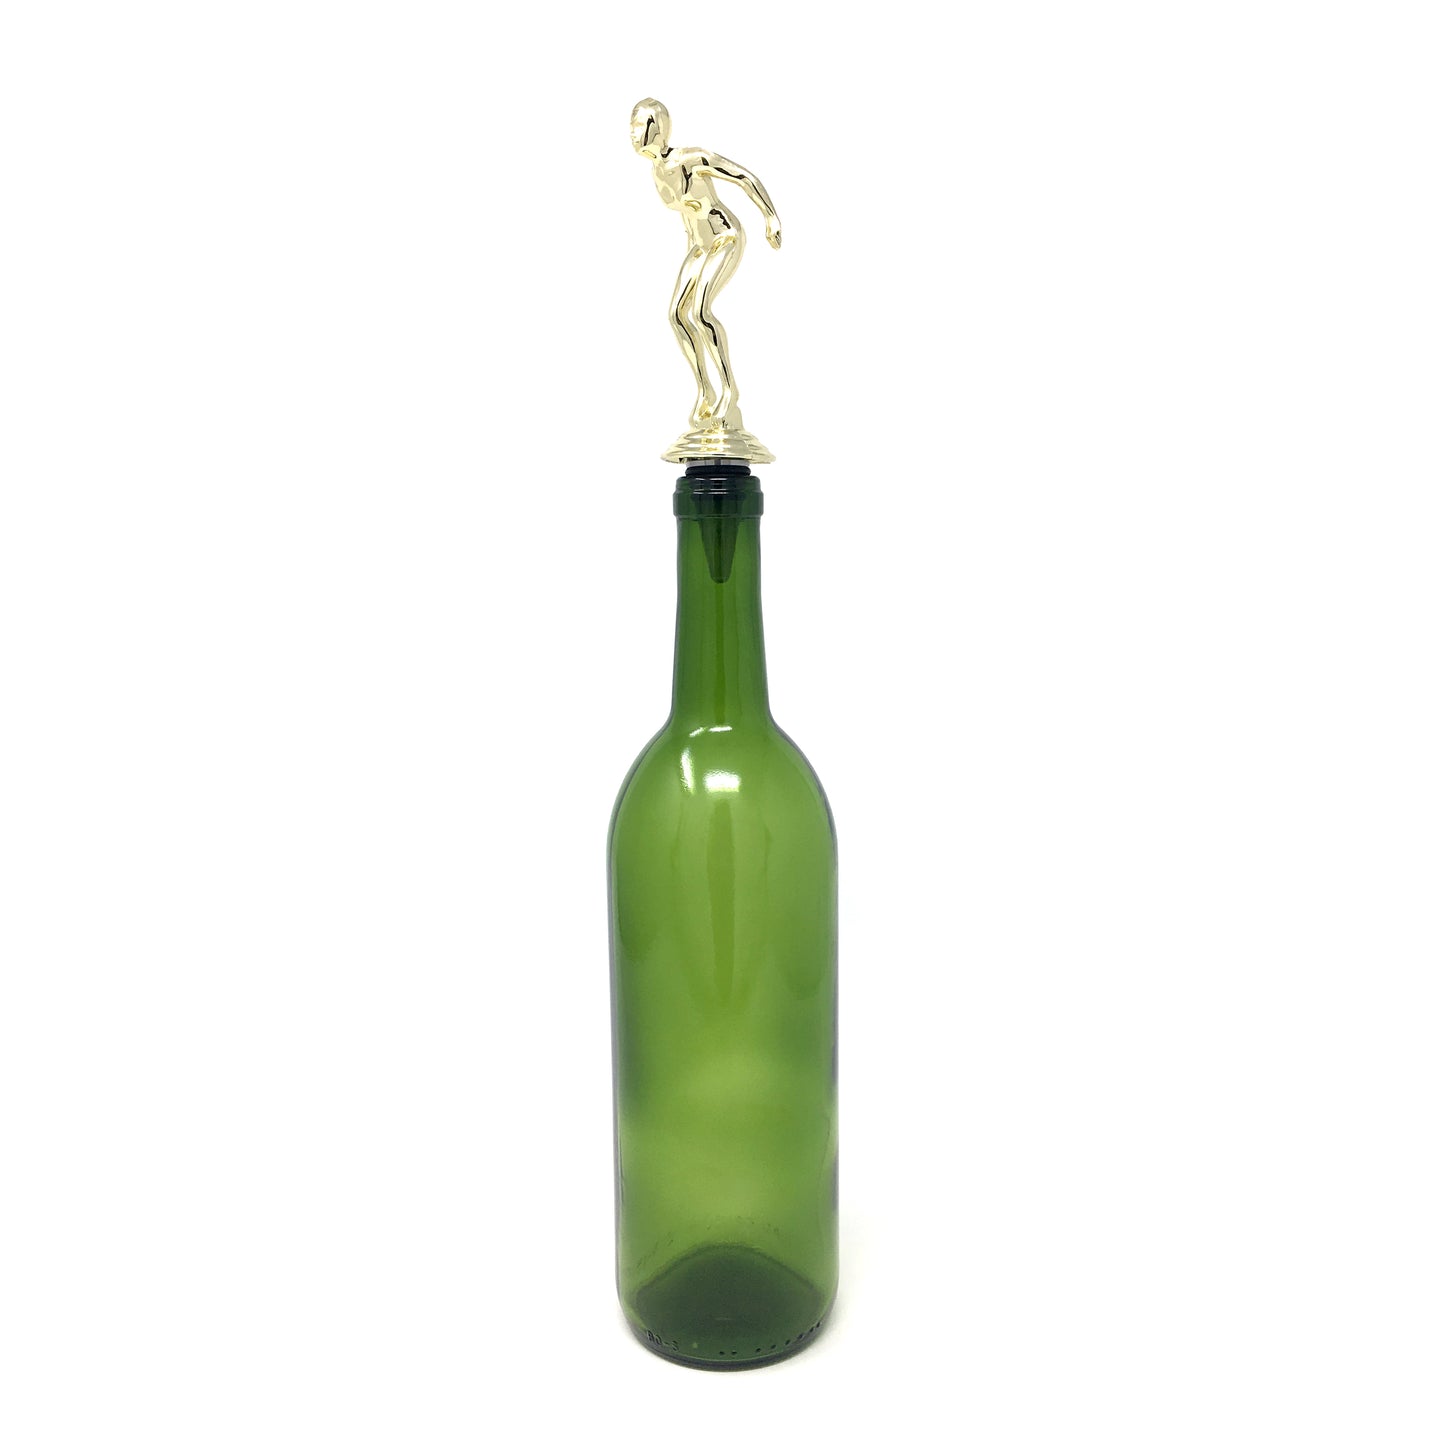 Swim Trophy Wine Bottle Stopper with Stainless Steel Base